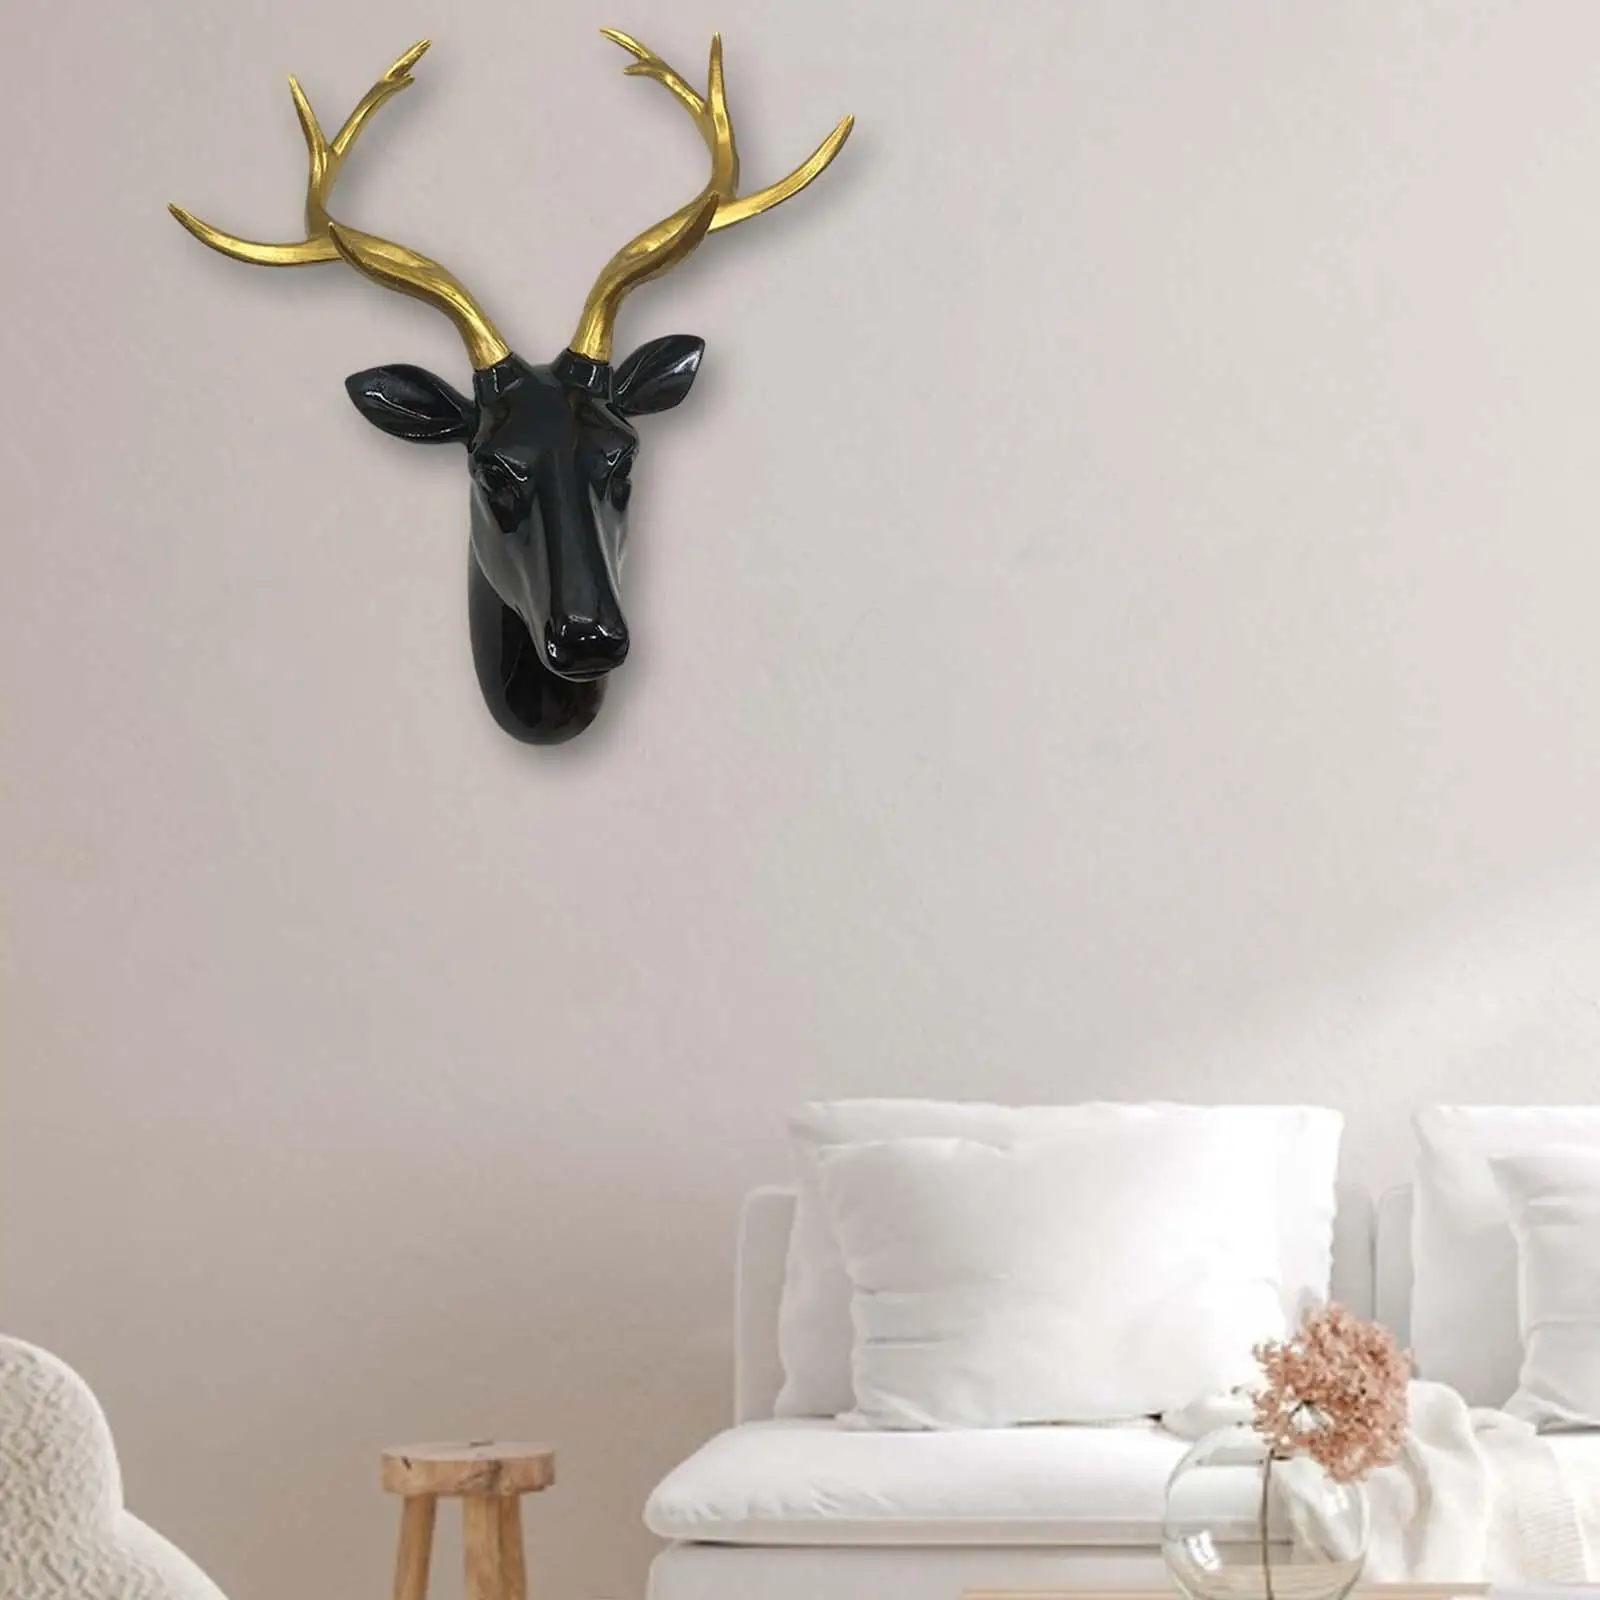 Deer Antler Wall Sculpture Deer Head Wall Decor Realistic Wall Hanging Elk